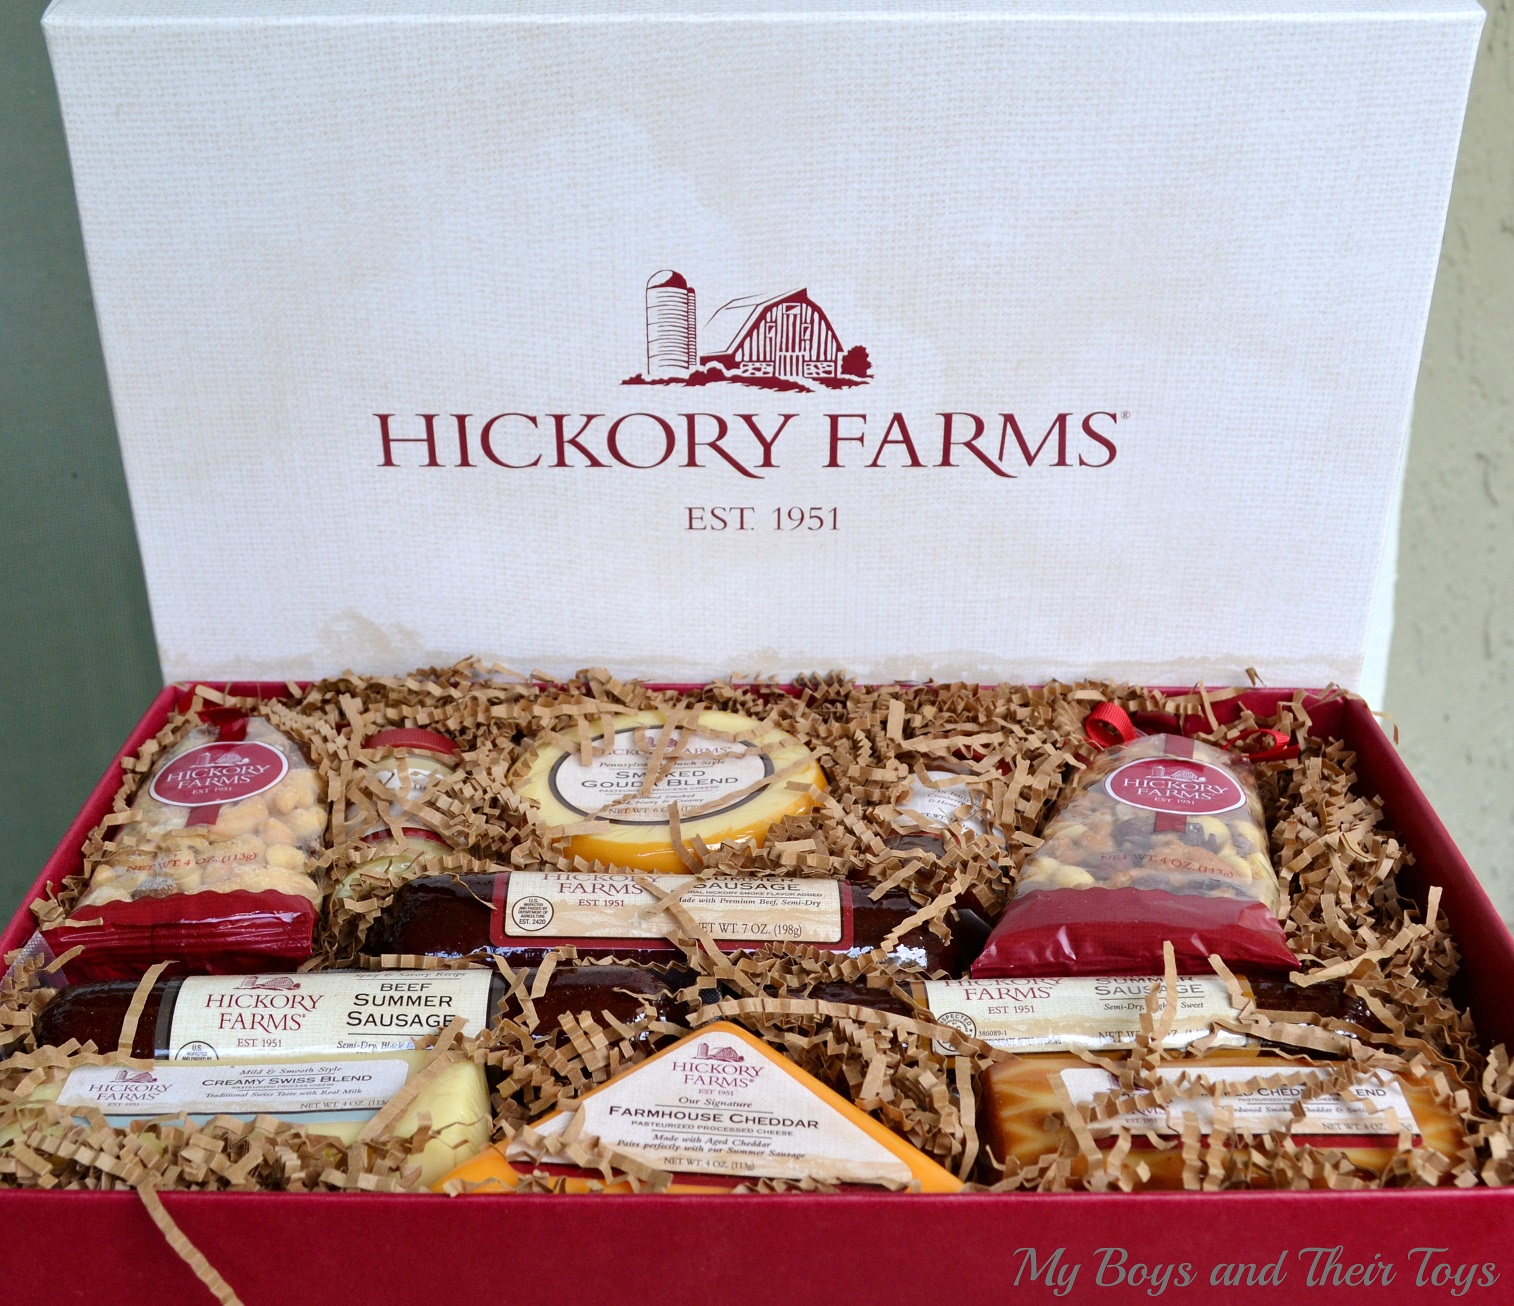  Hickory Farms Savory Sausage and Cheese Sampler Gift